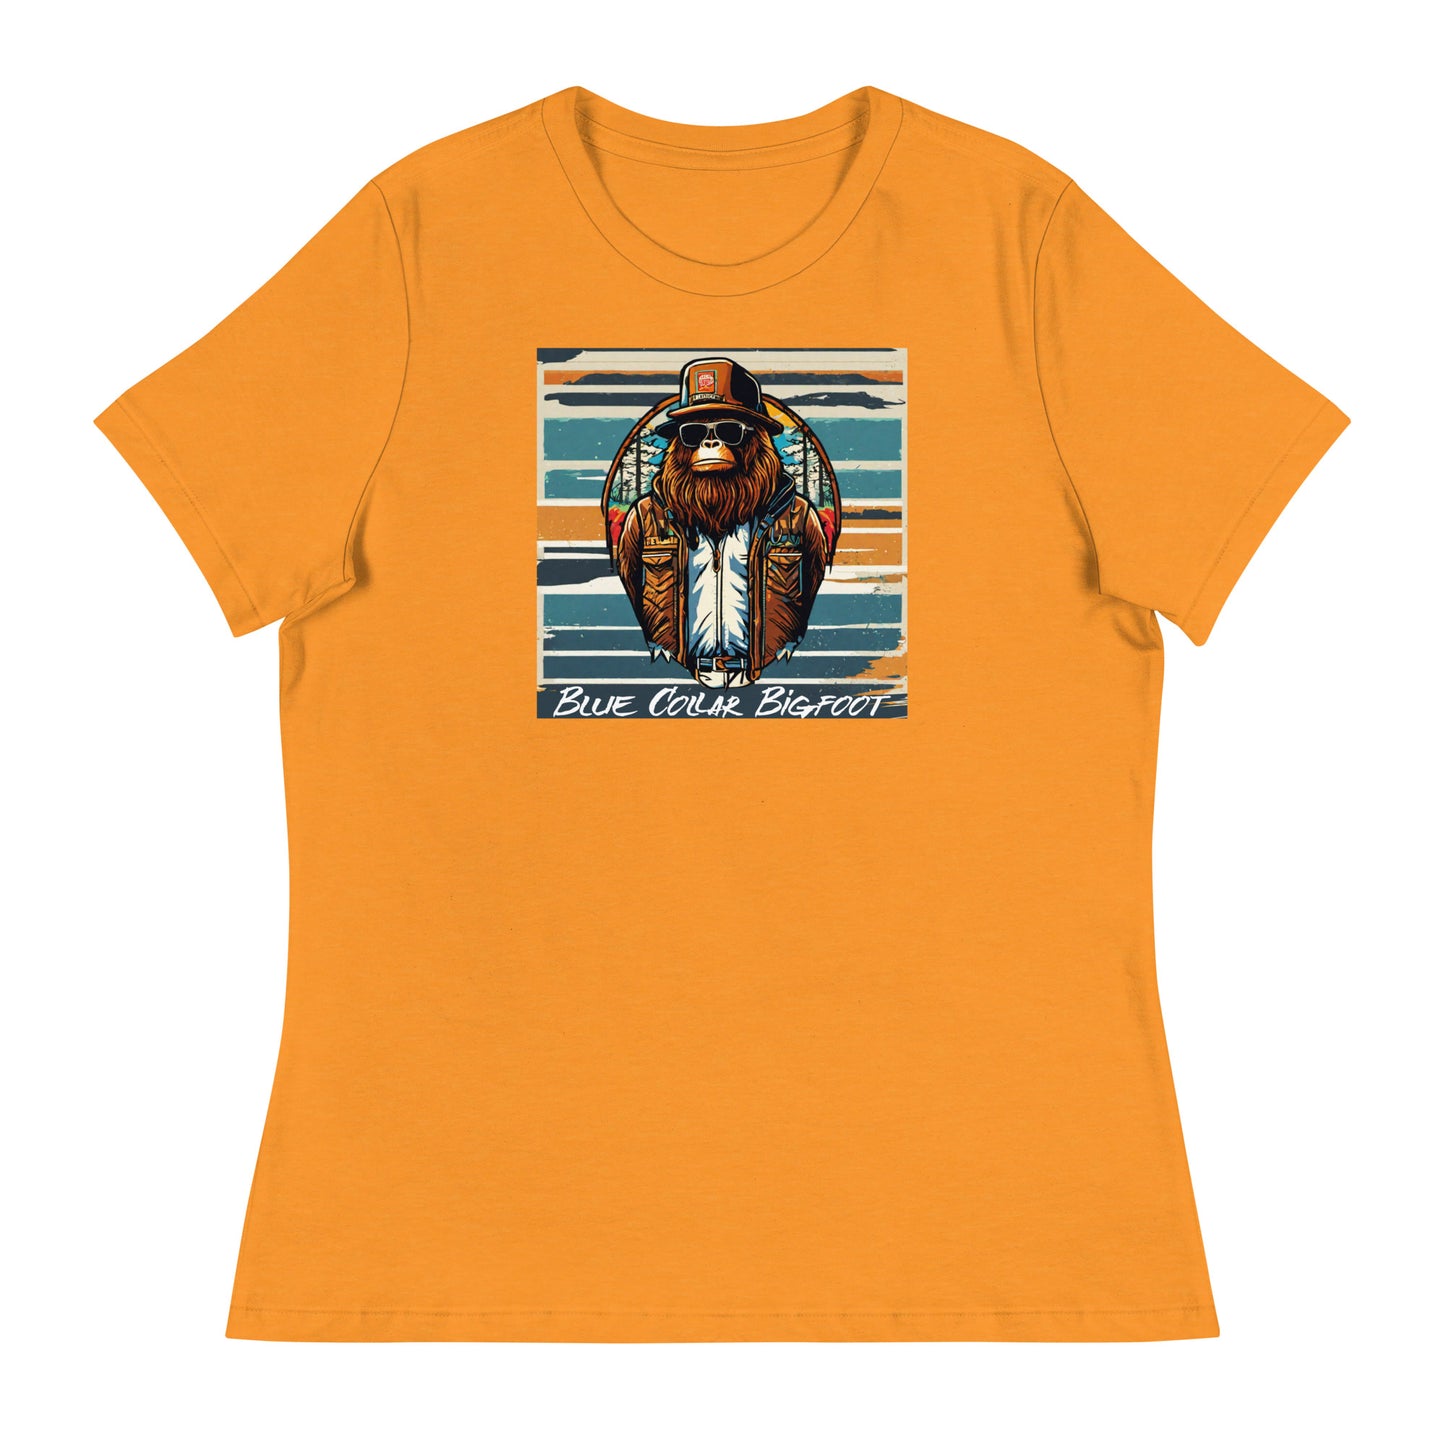 Blue-Collar Bigfoot Women's Graphic T-Shirt Heather Marmalade